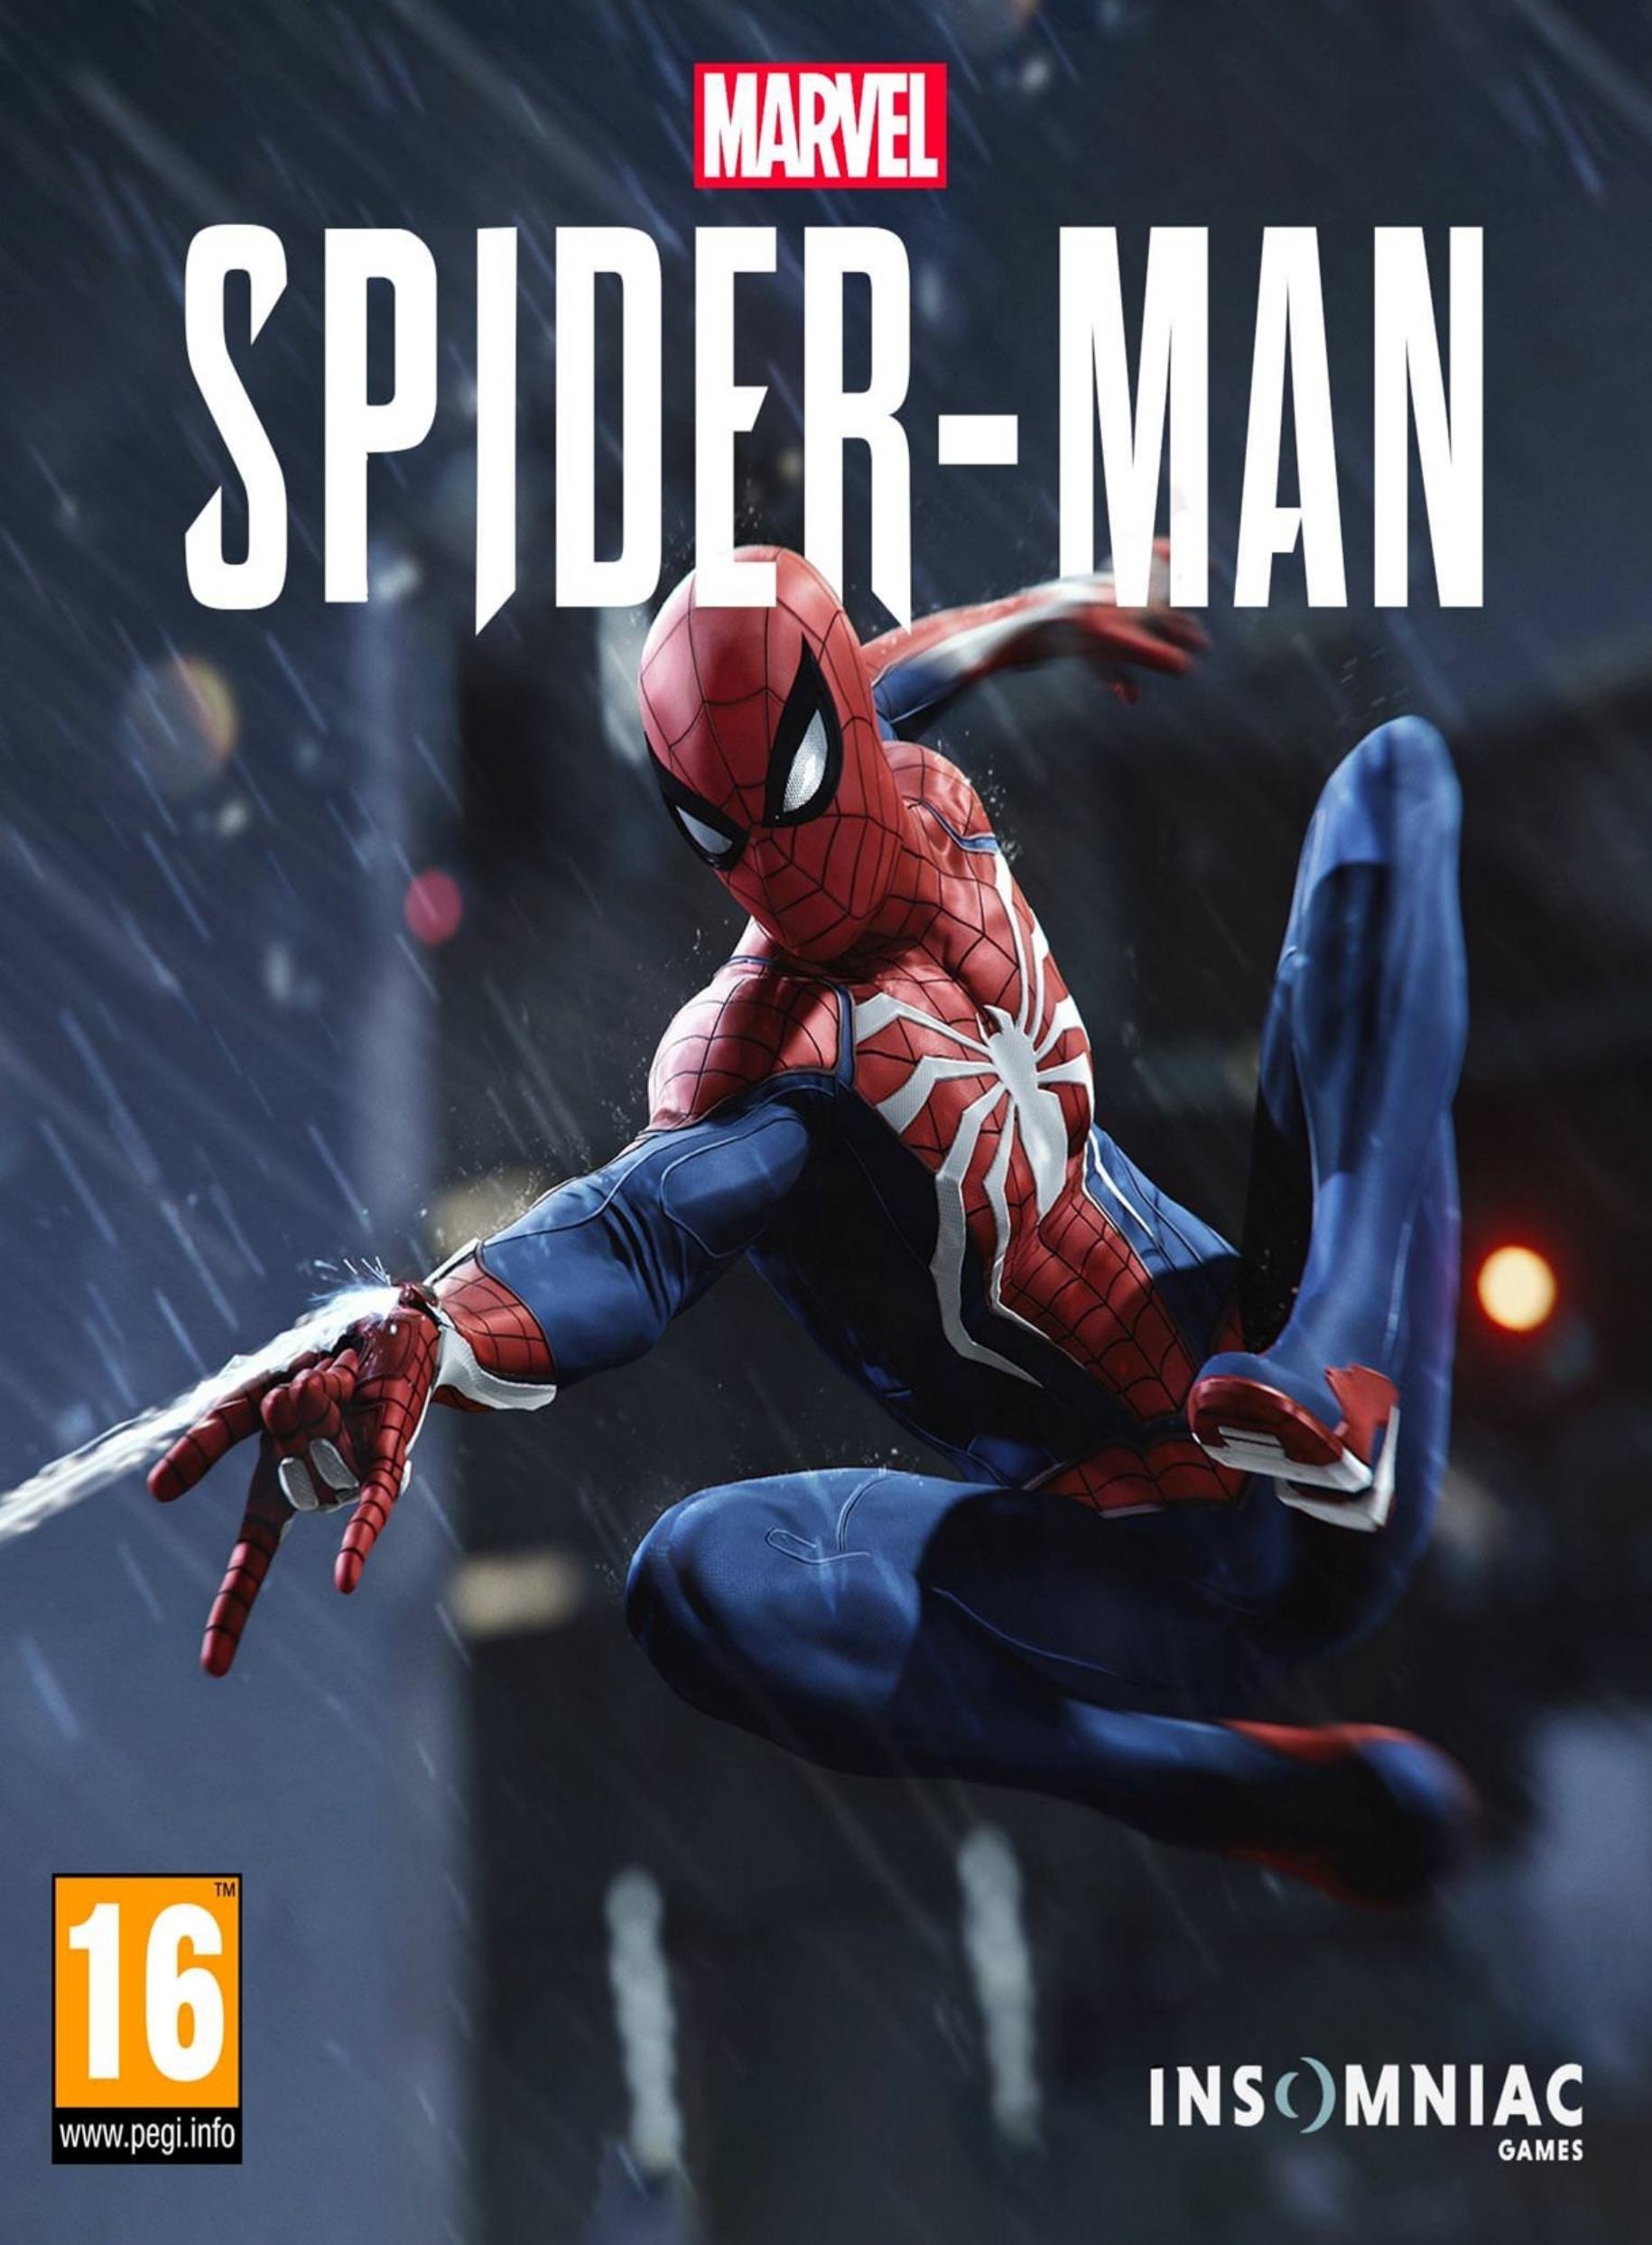 Re)Jogando Games Antigos #4 - Spider-Man 